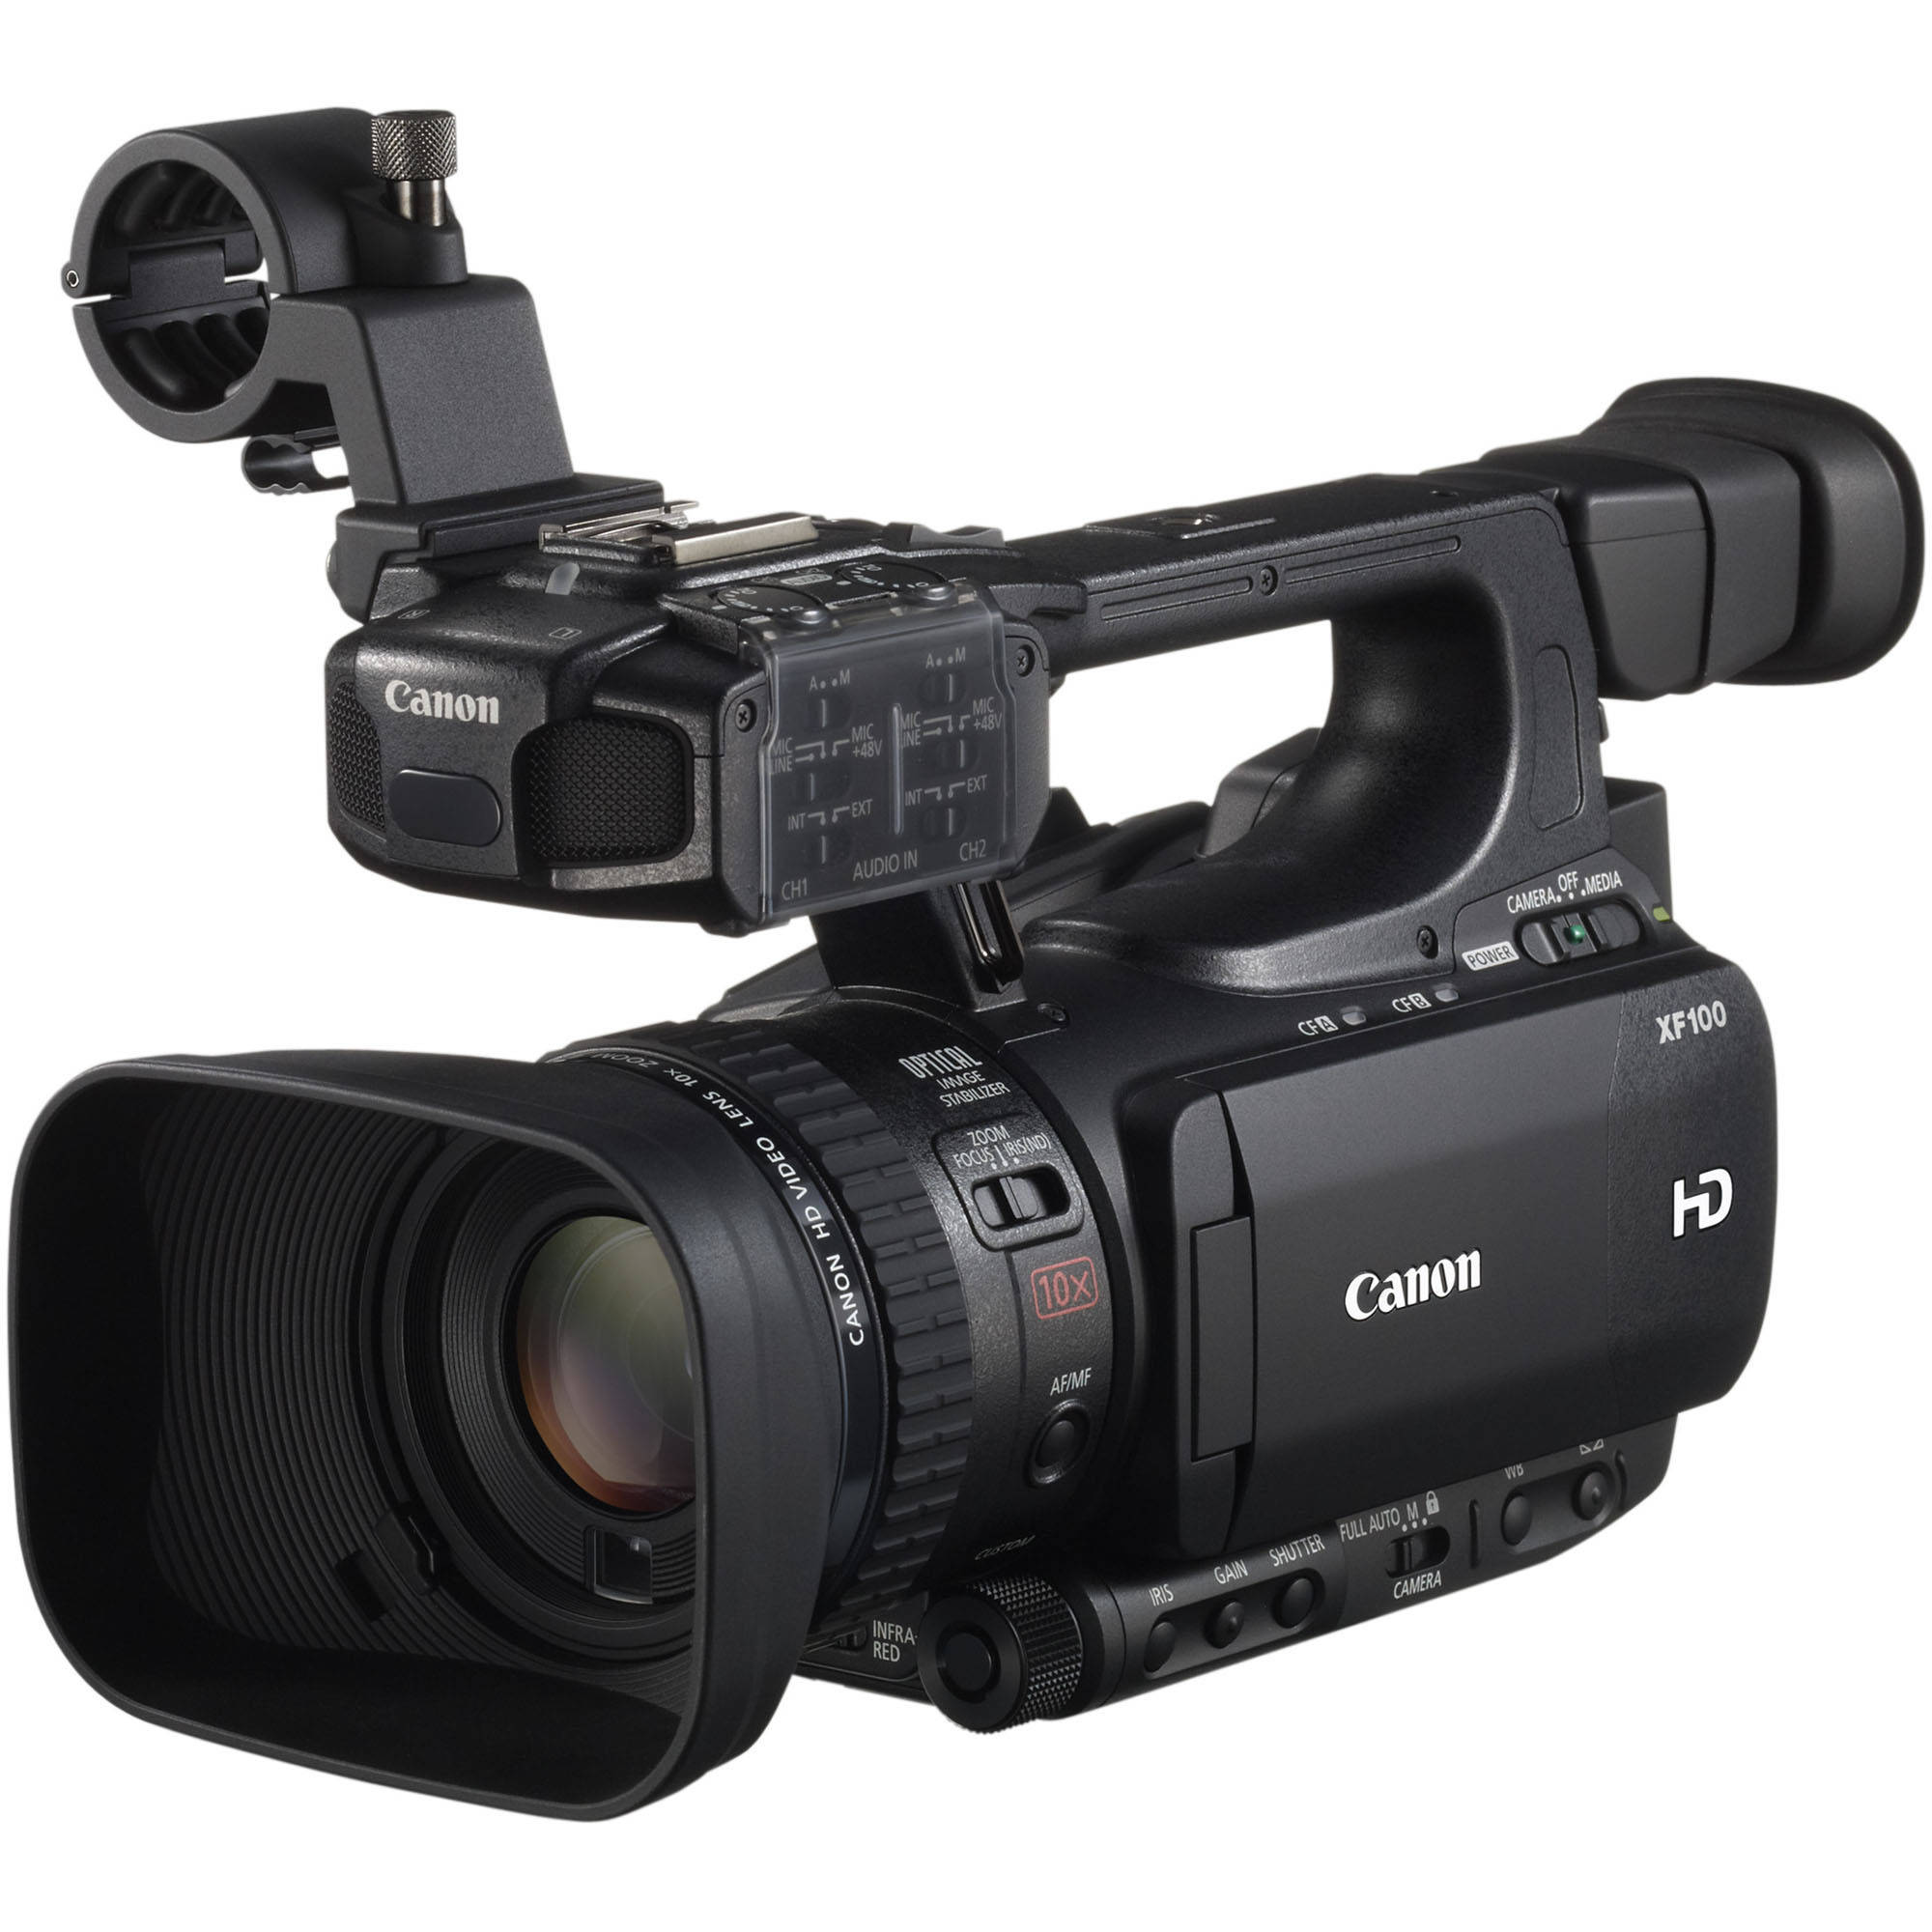 Canon XF100 HD Professional Camcorder 4888B001 B&H Photo Video